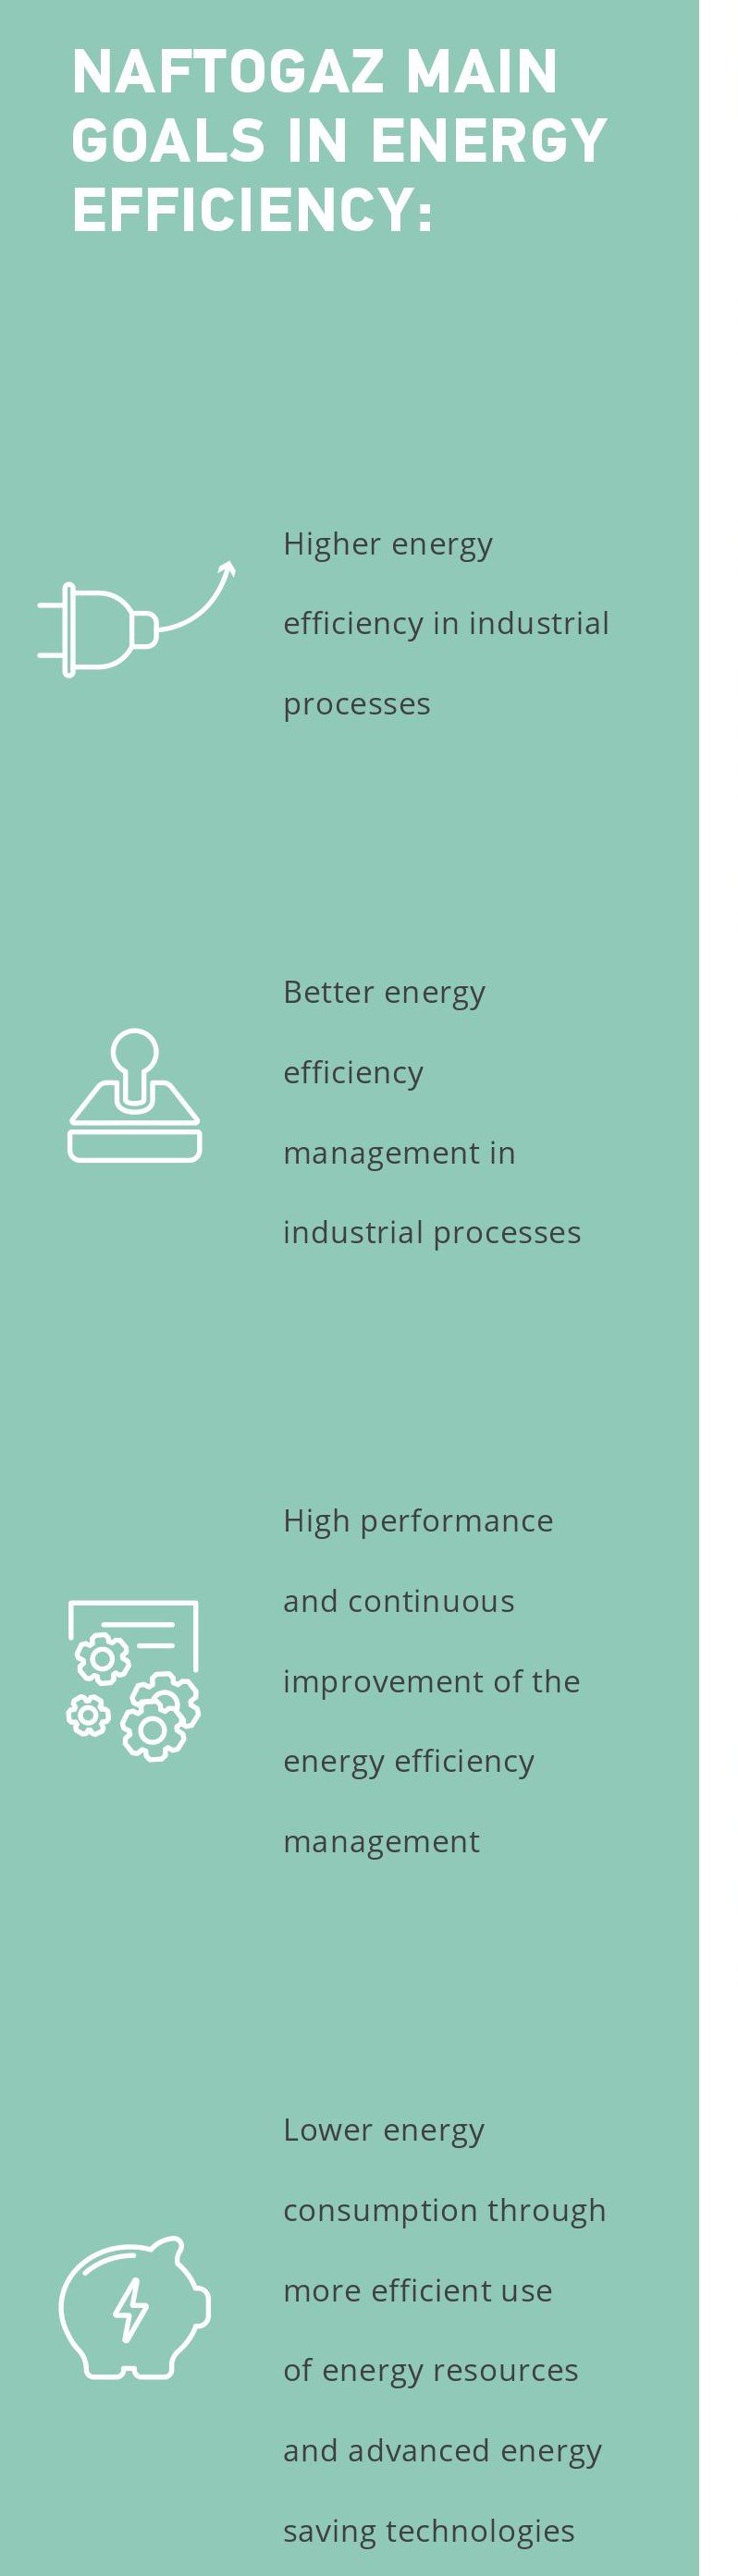 Naftogaz main goals in energy efficiency